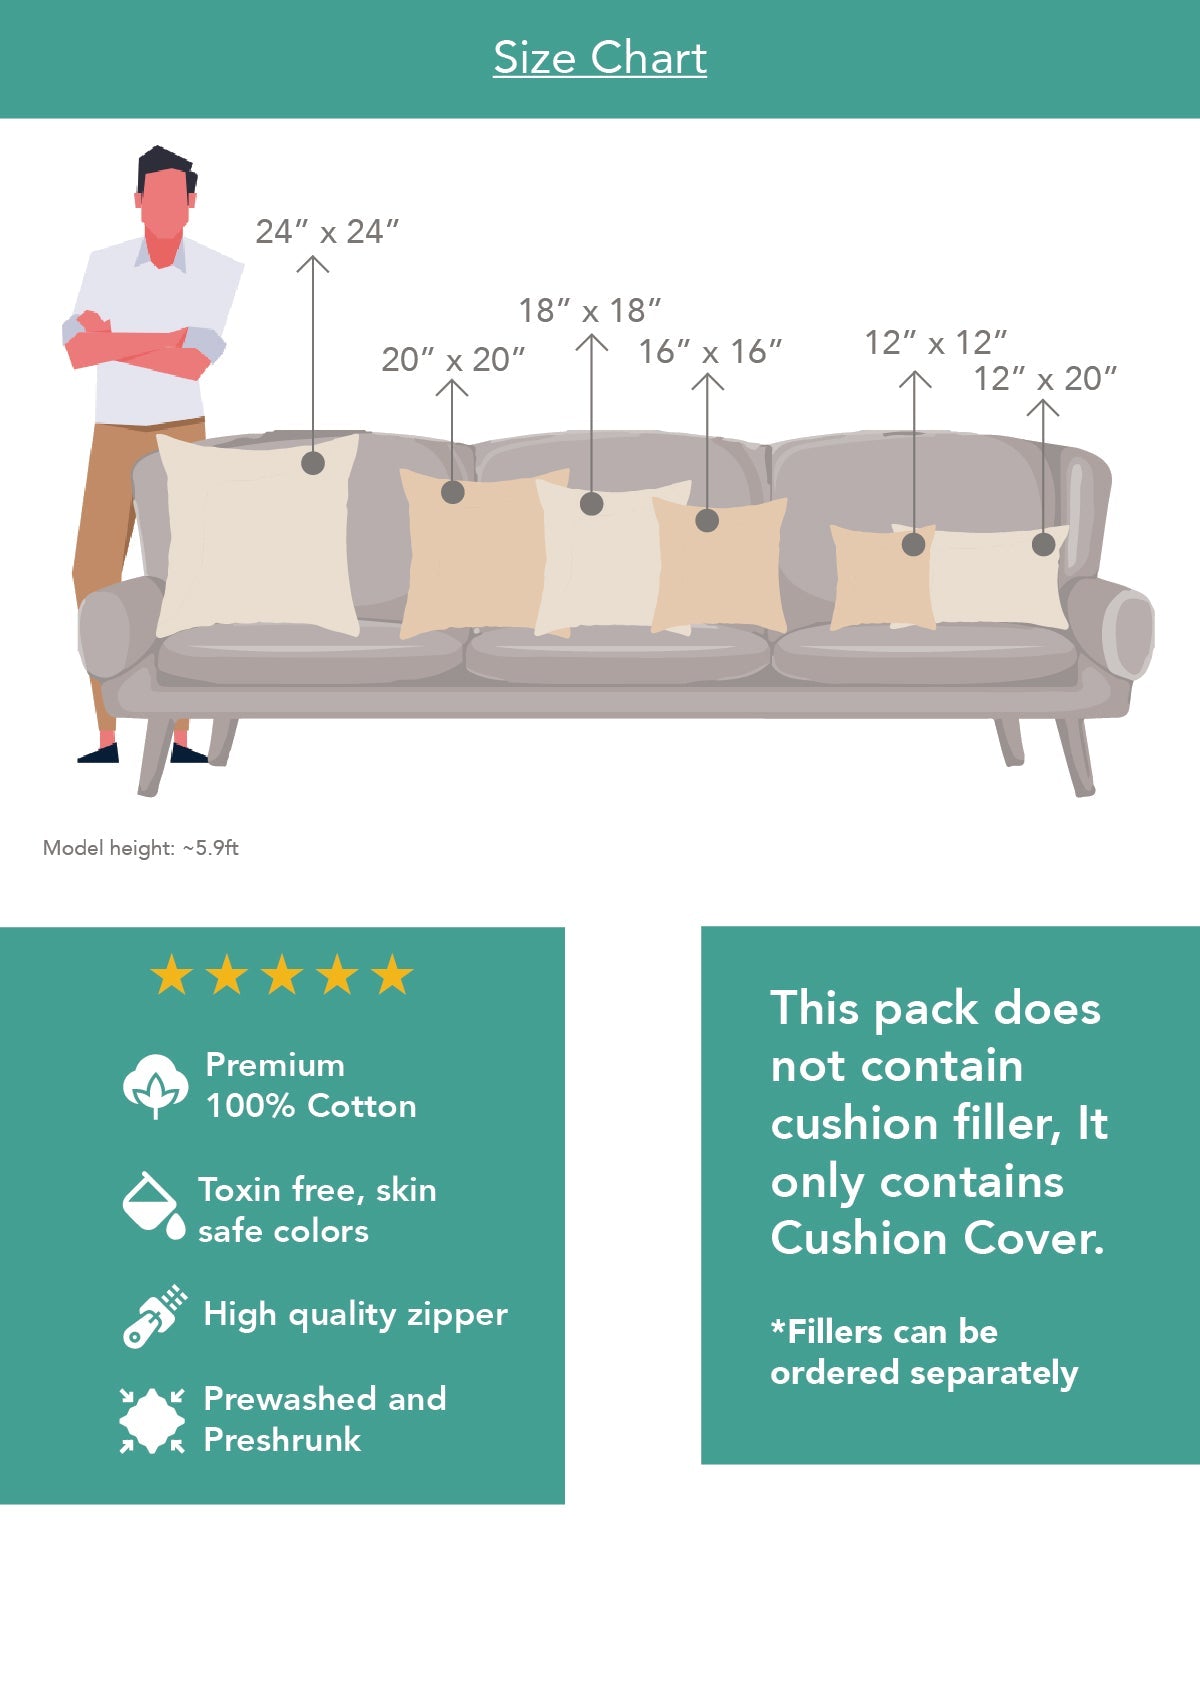 Kutch Patchwork 100% cotton decorative cushion cover for sofa - Multicolor